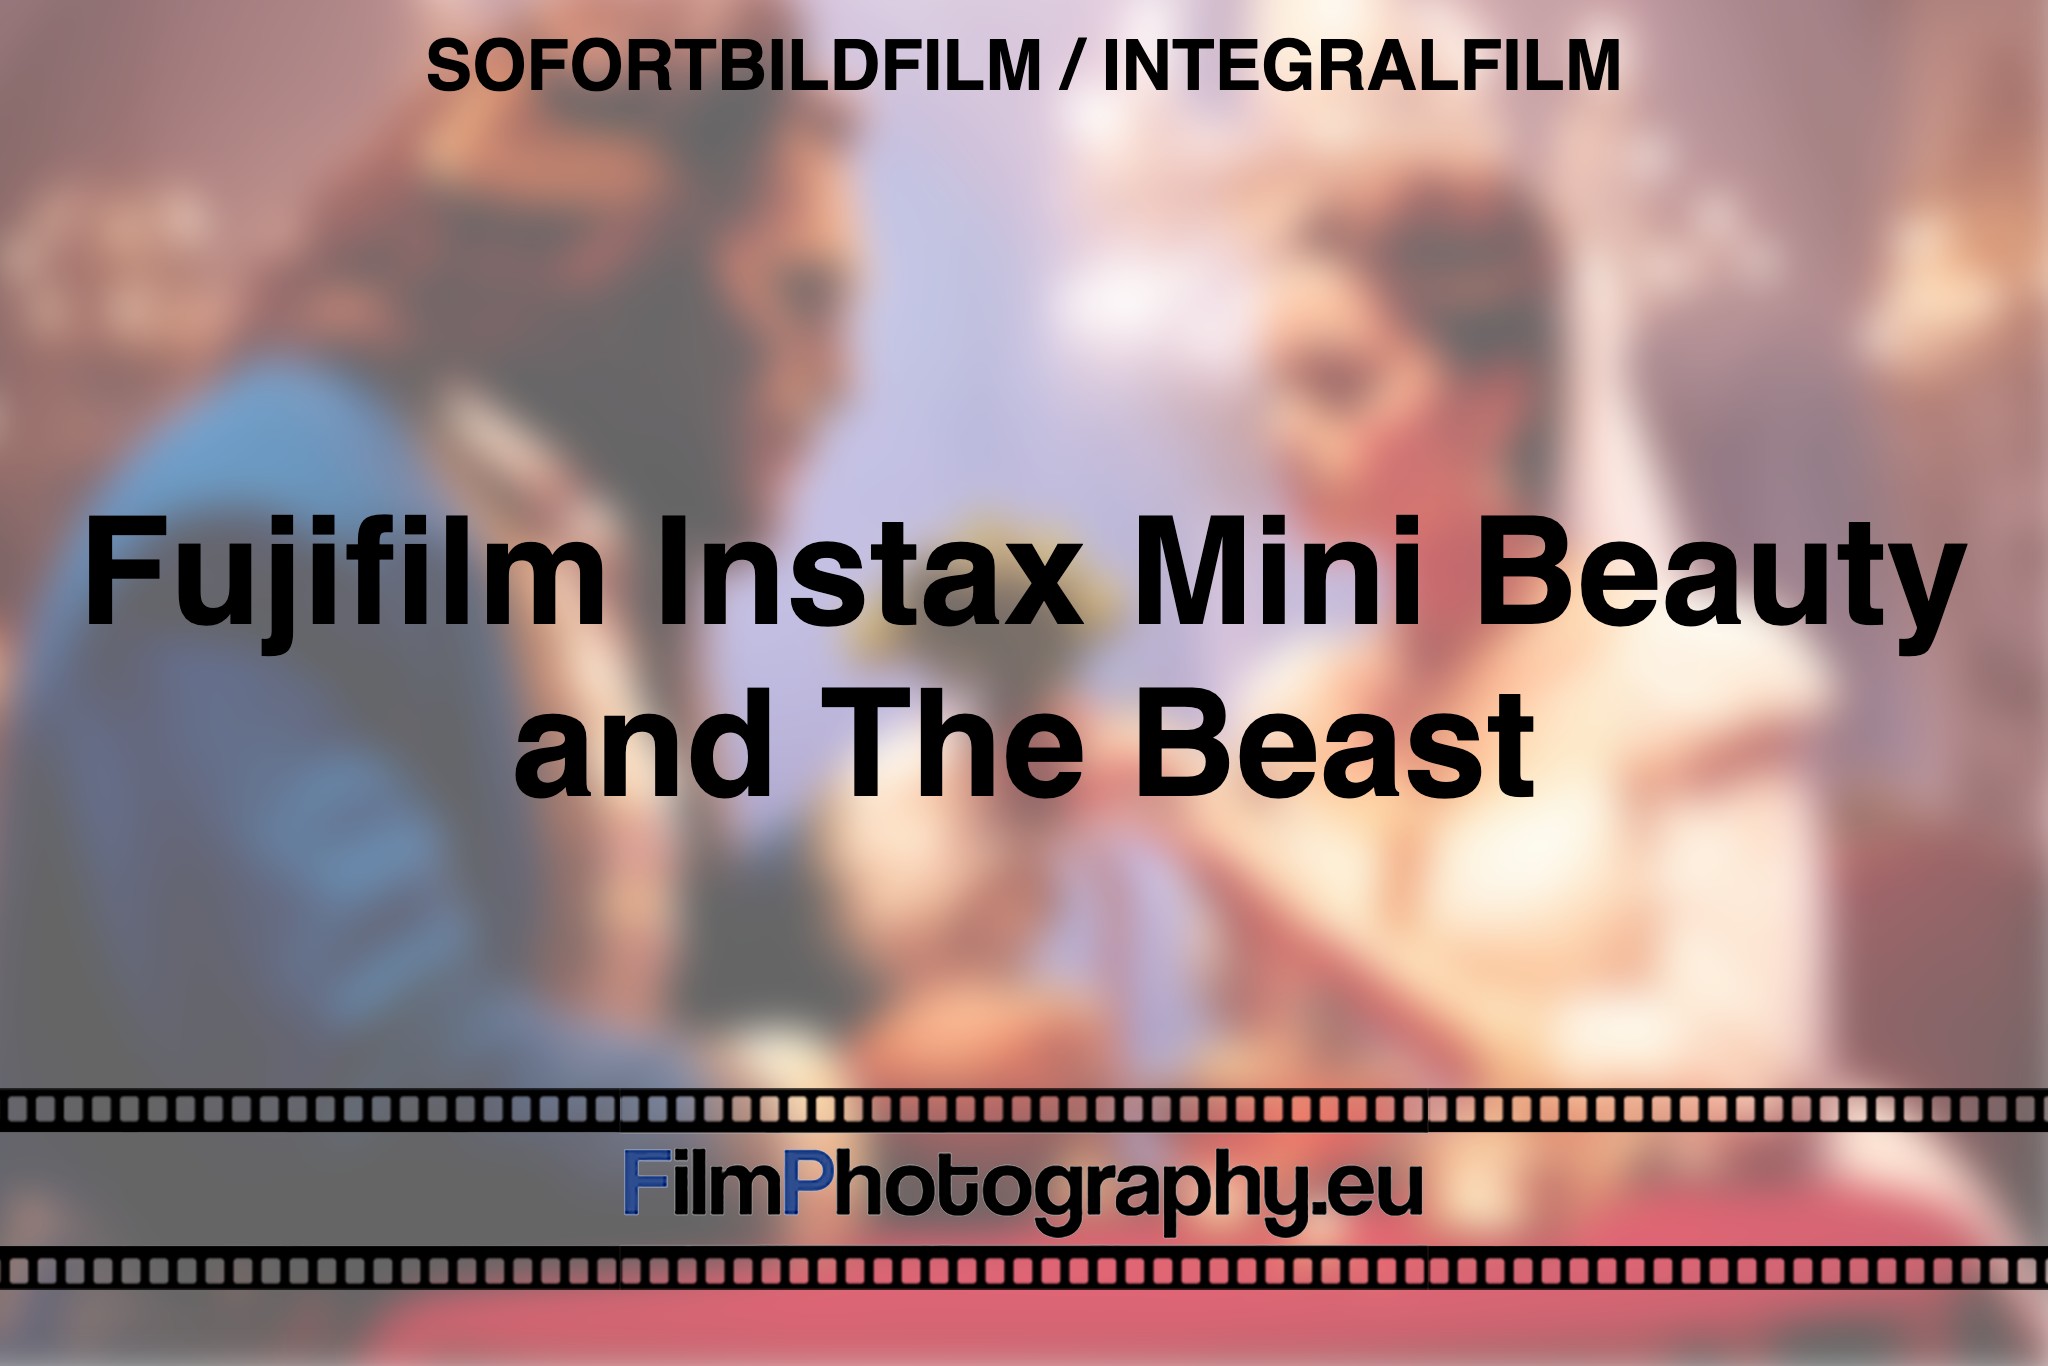 fujifilm-instax-mini-beauty-and-the-beast-sofortbildfilm-integralfilm-fp-bnv